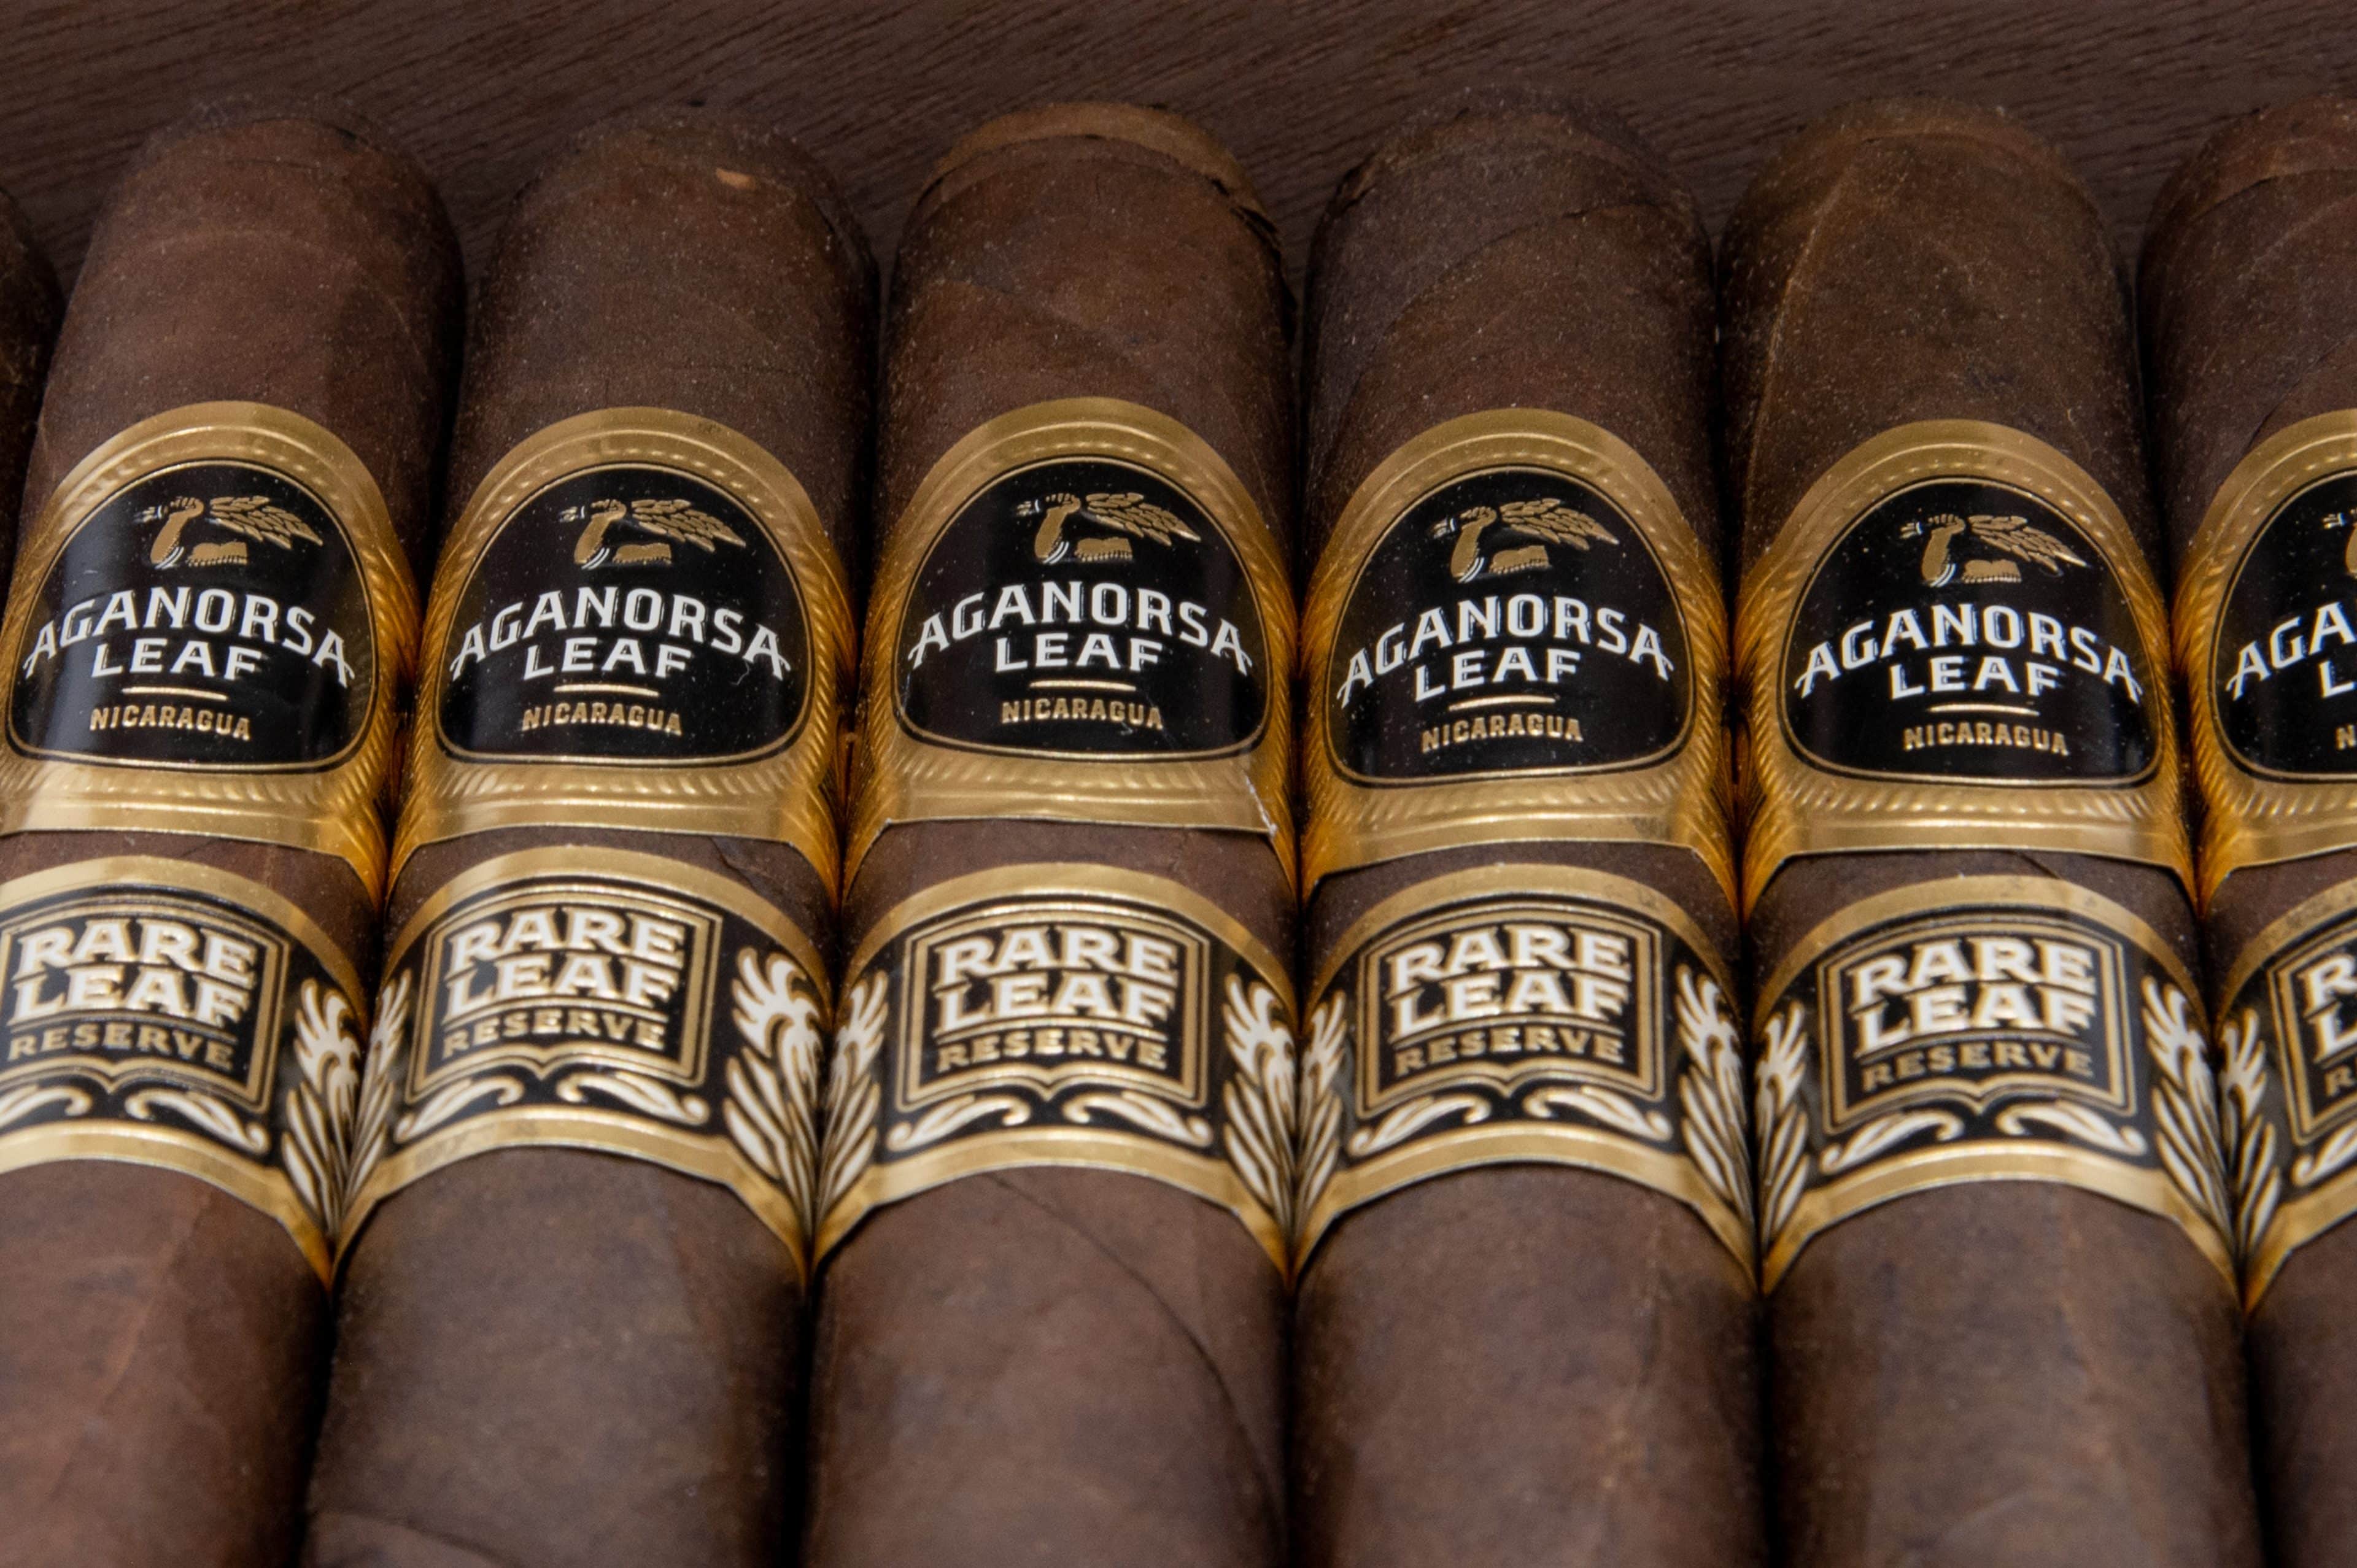 Aganorsa Leaf Announces Rare Leaf Reserve Maduro - Cigar News